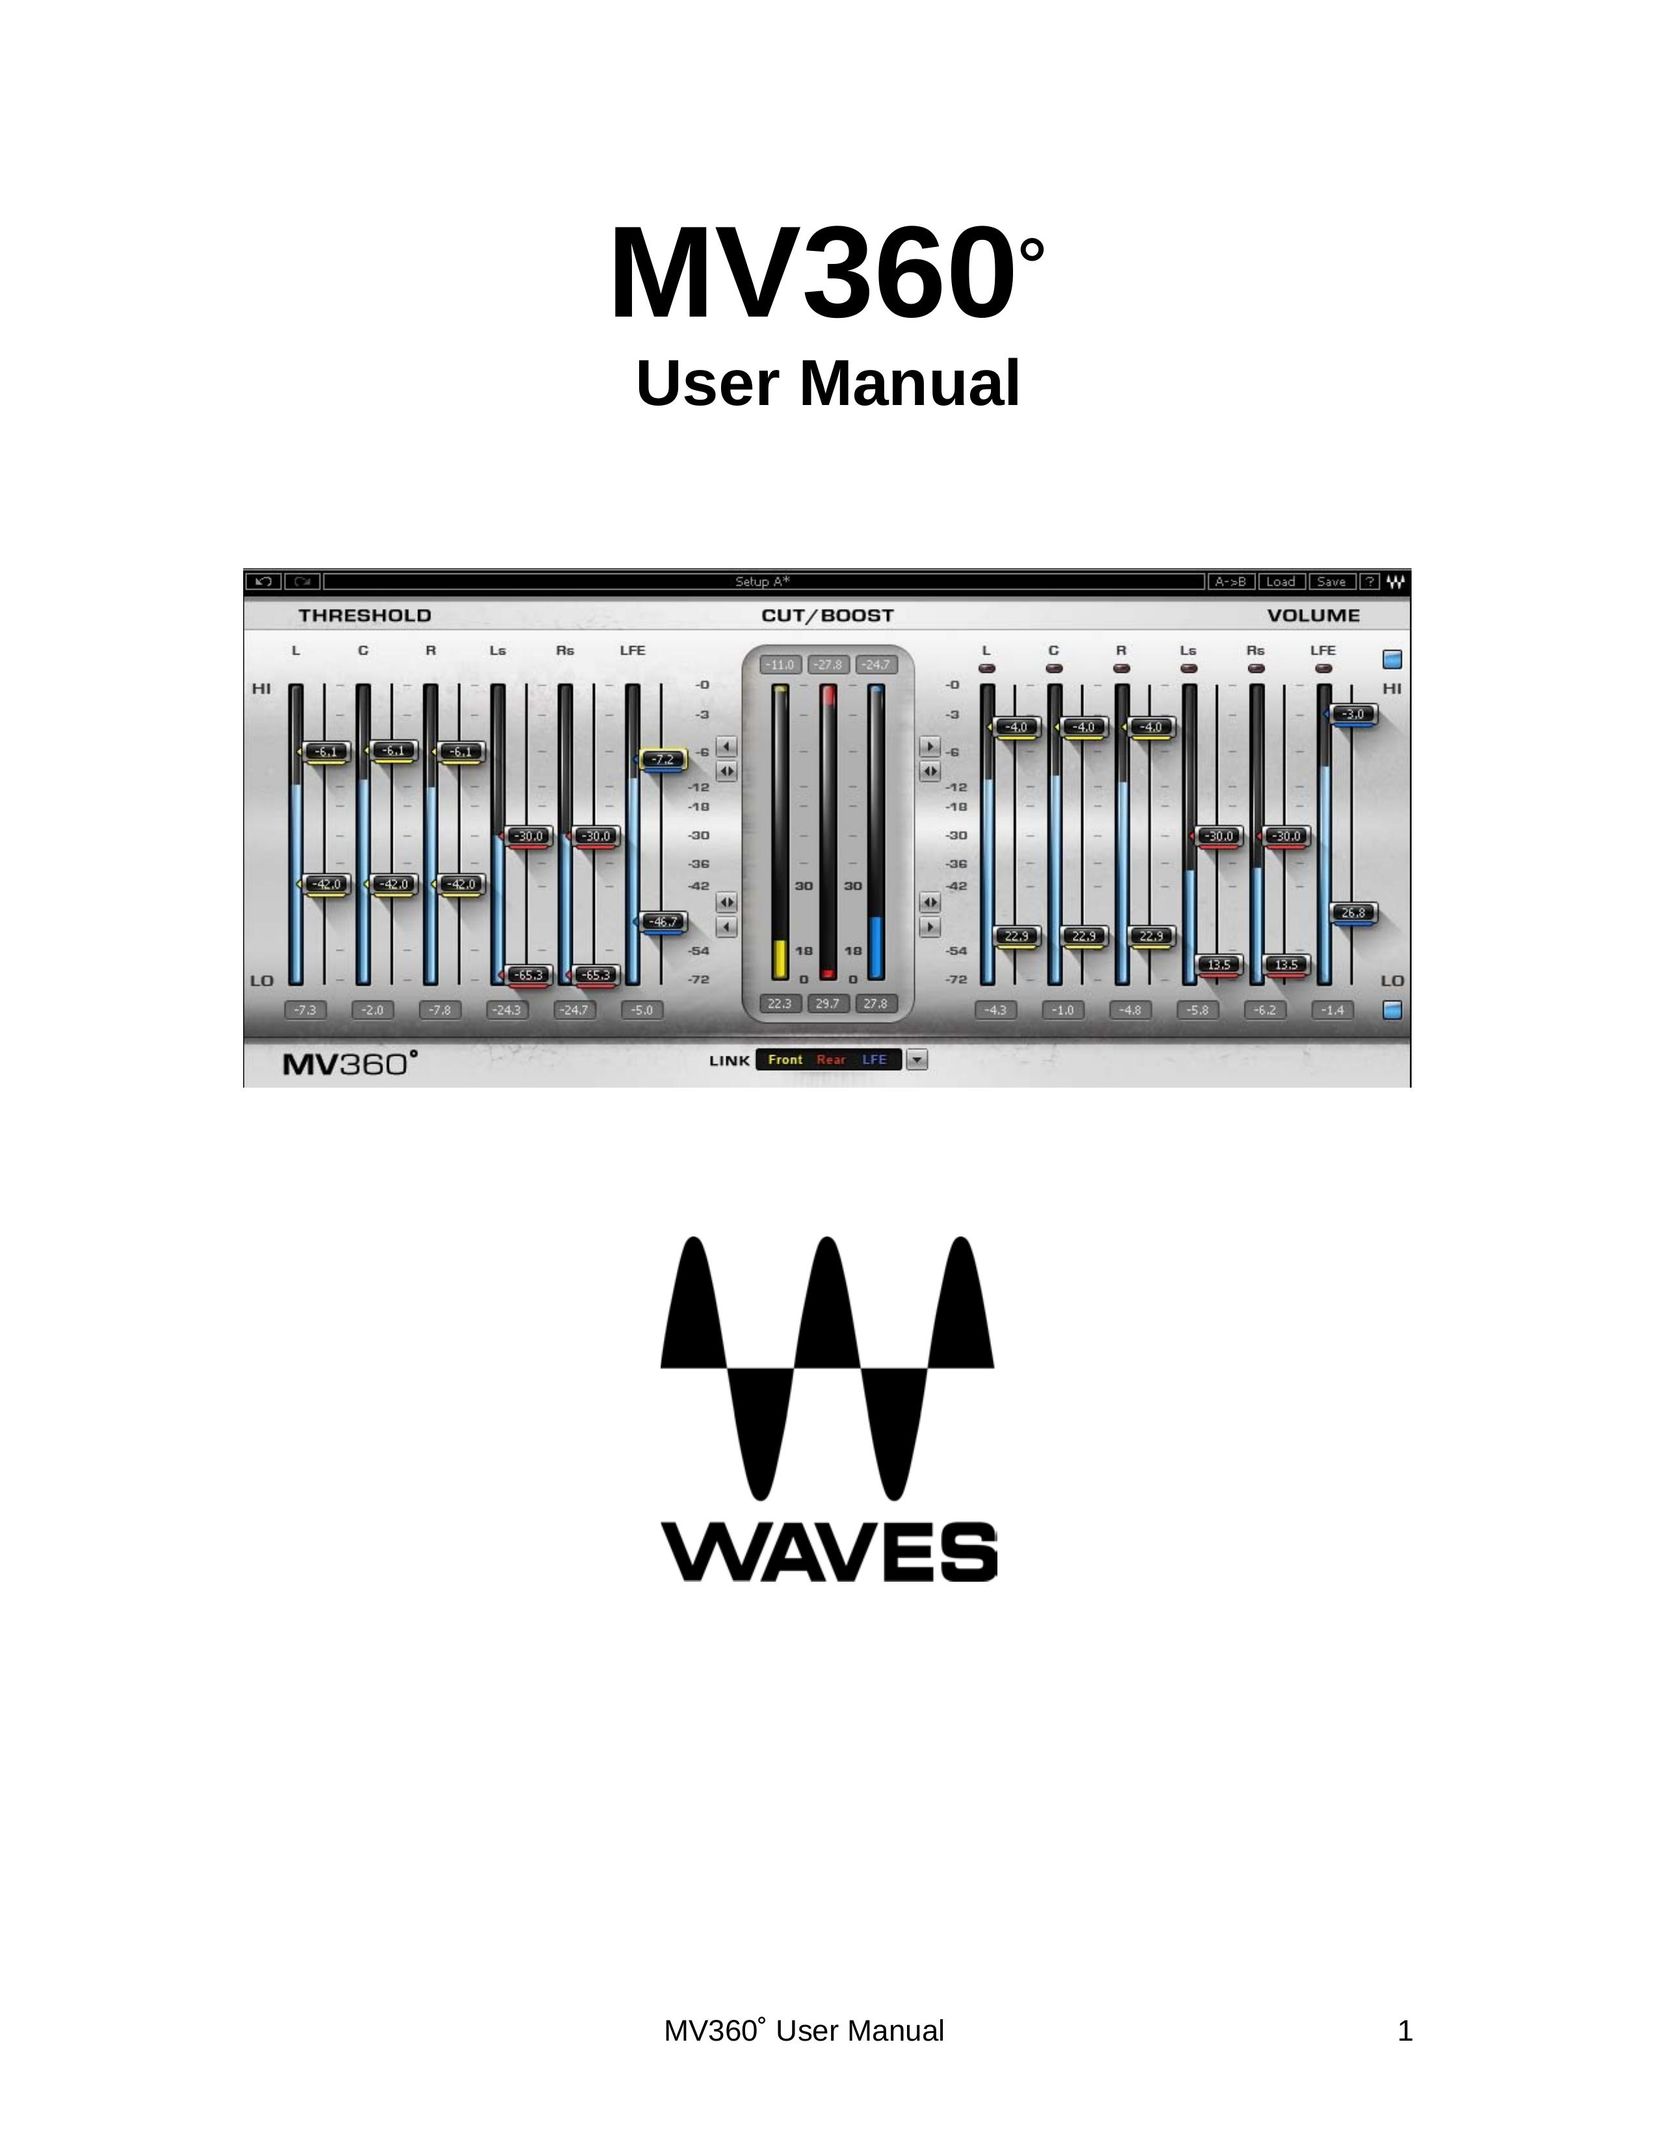 Waves MV360 Network Card User Manual